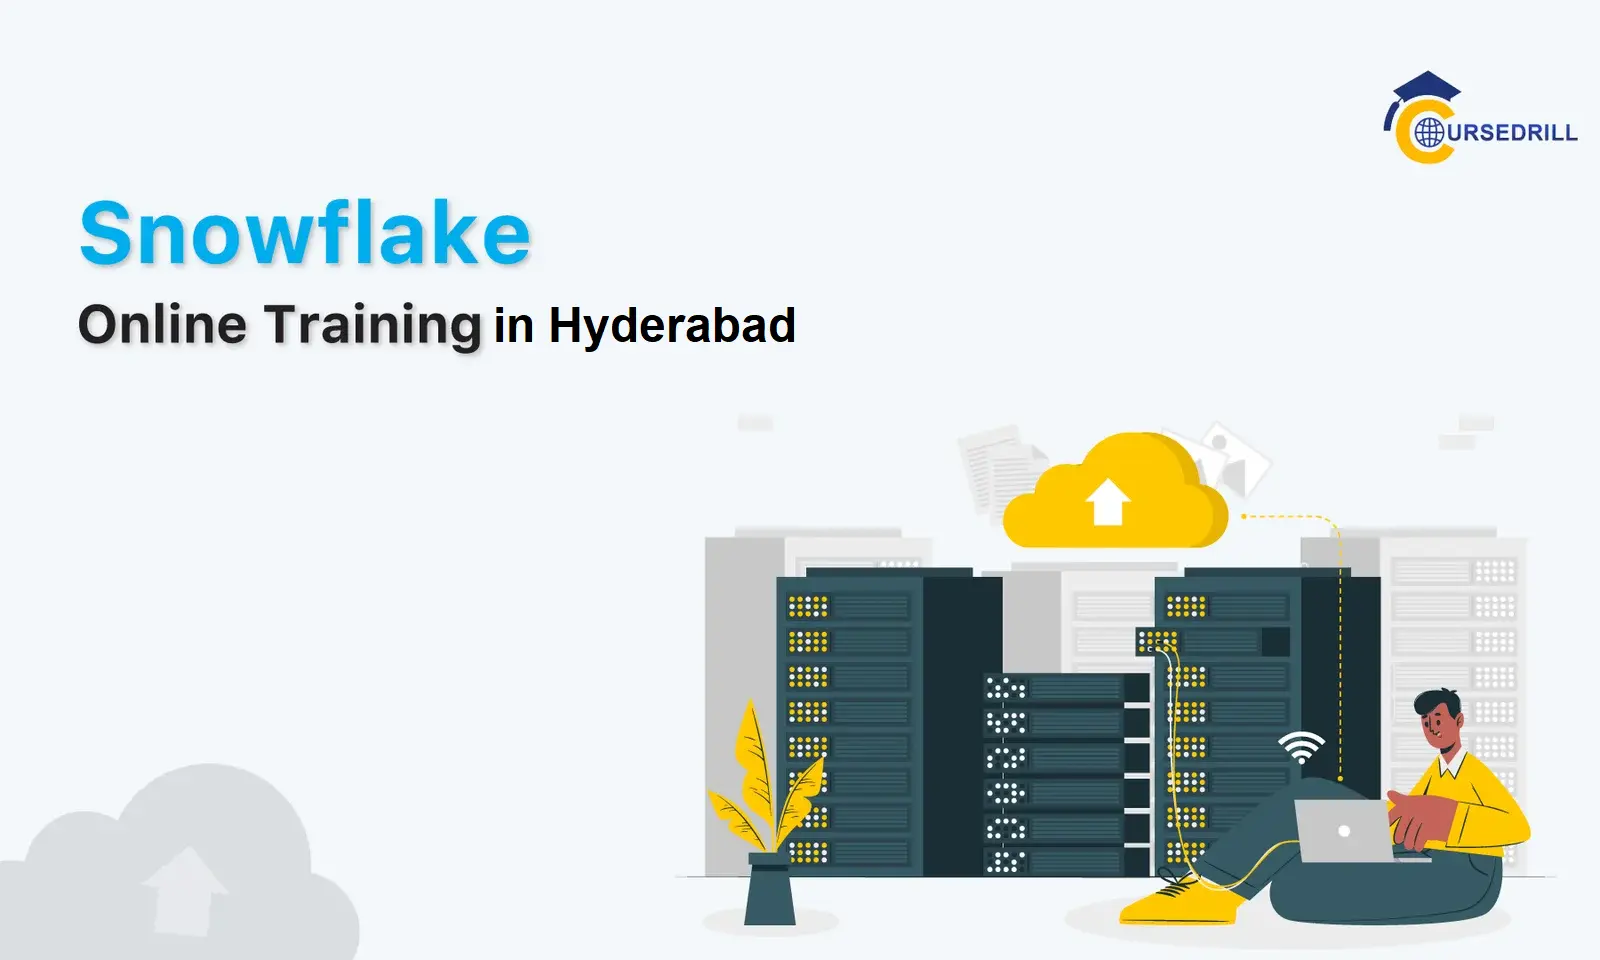 Snowflake Training in Hyderabad